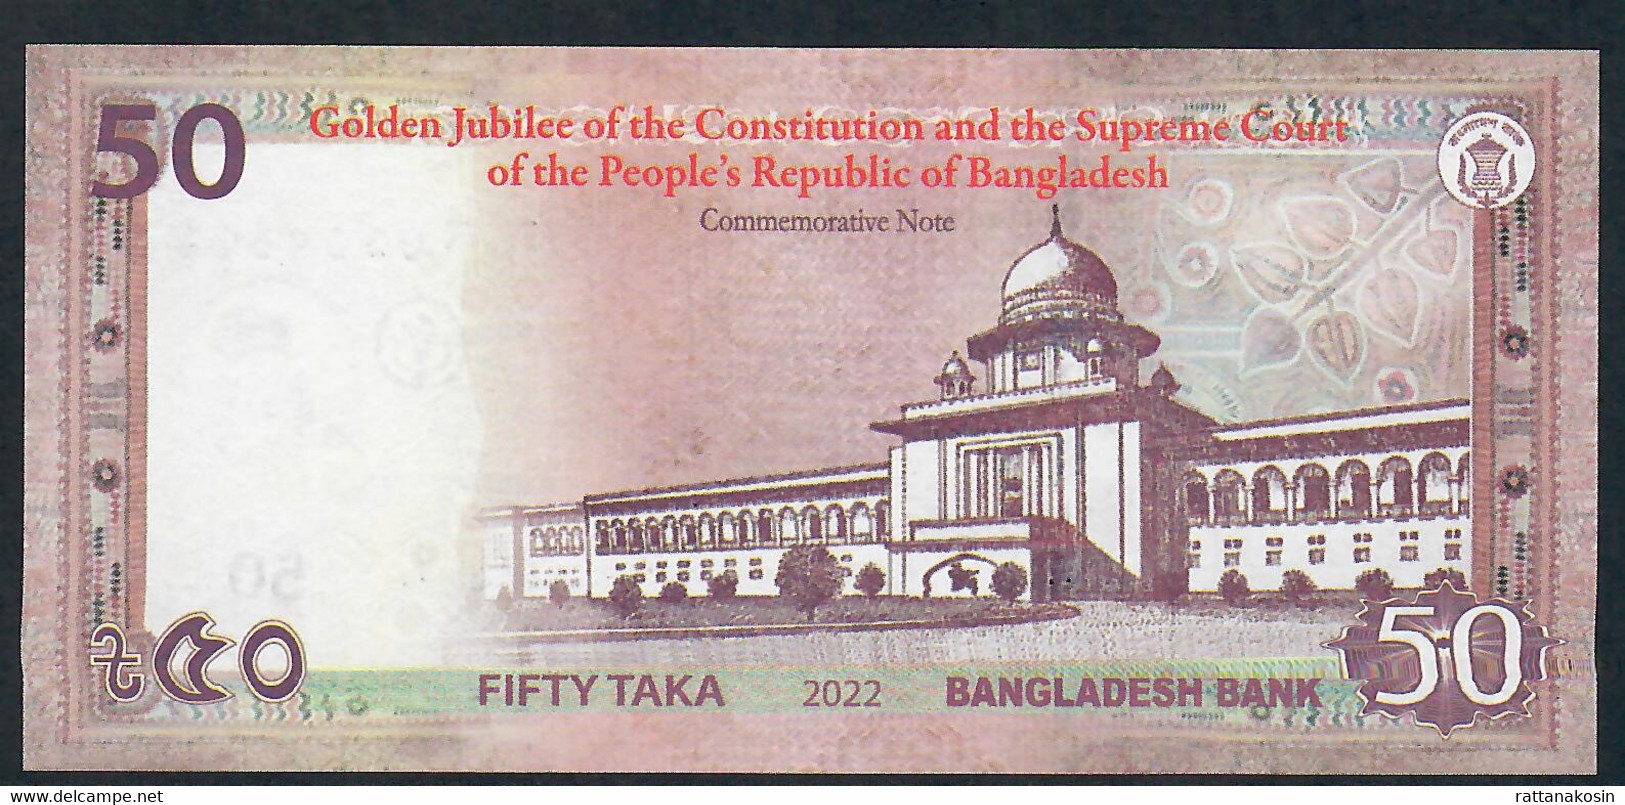 BANGLADESH BNP308b  50 TAKA 2022 COMMEMORATIVE SUPREME COURT Issued In DEC.19th,2022  & FOLDER IN ENGLISH  UNC. - Bangladesh